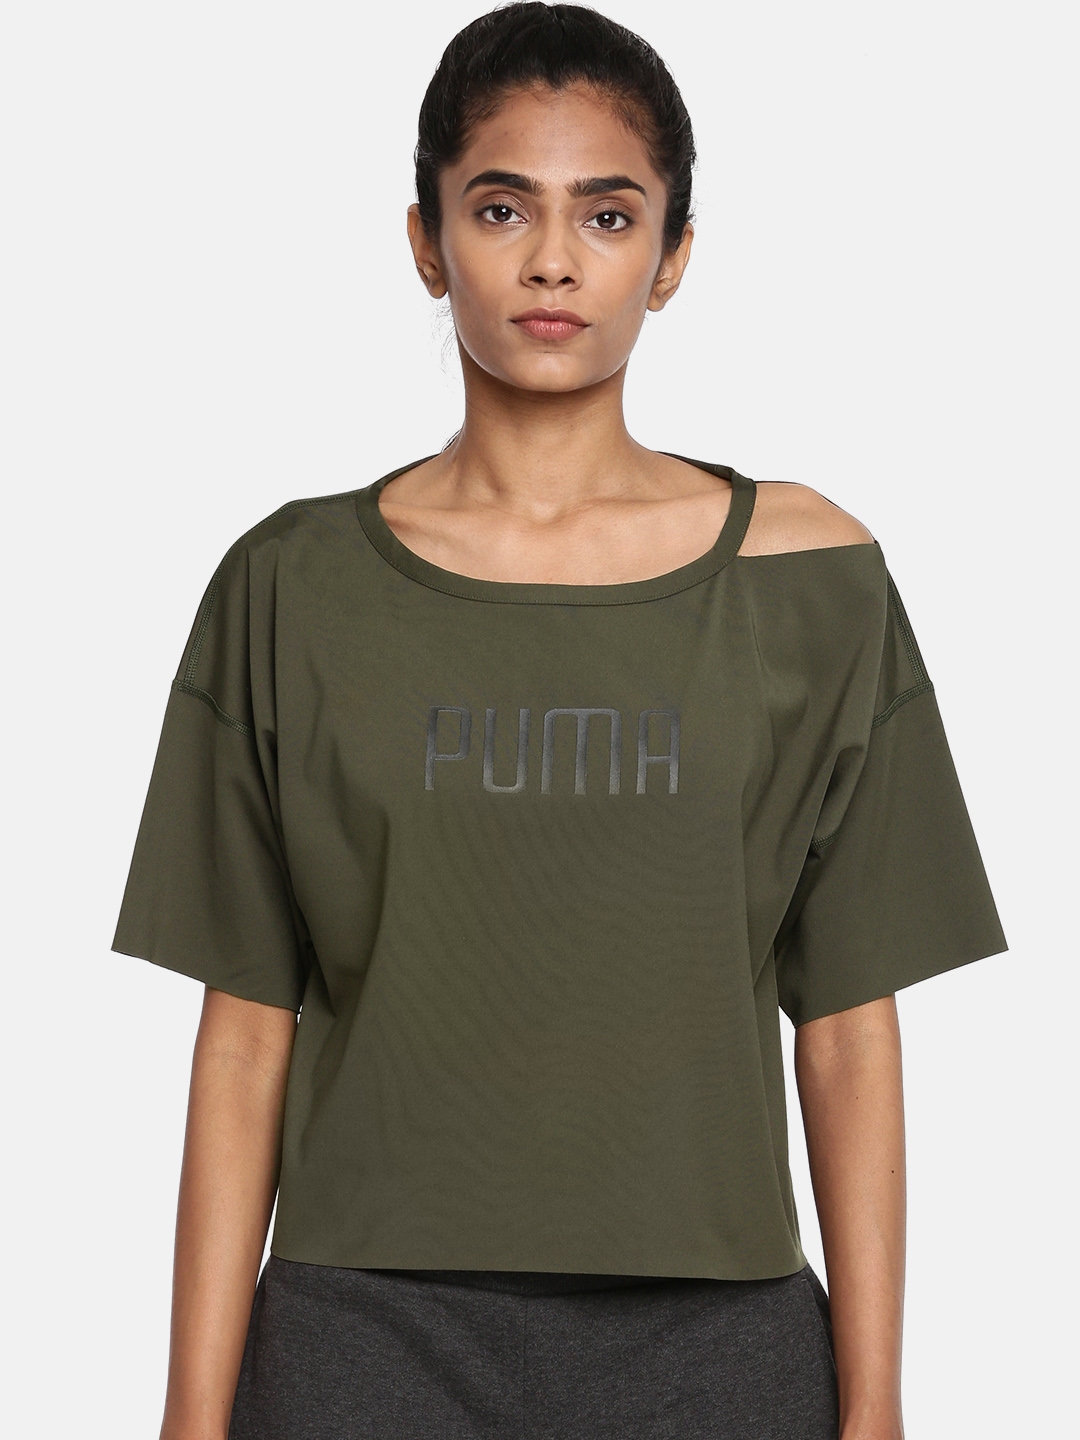 olive green puma shirt womens